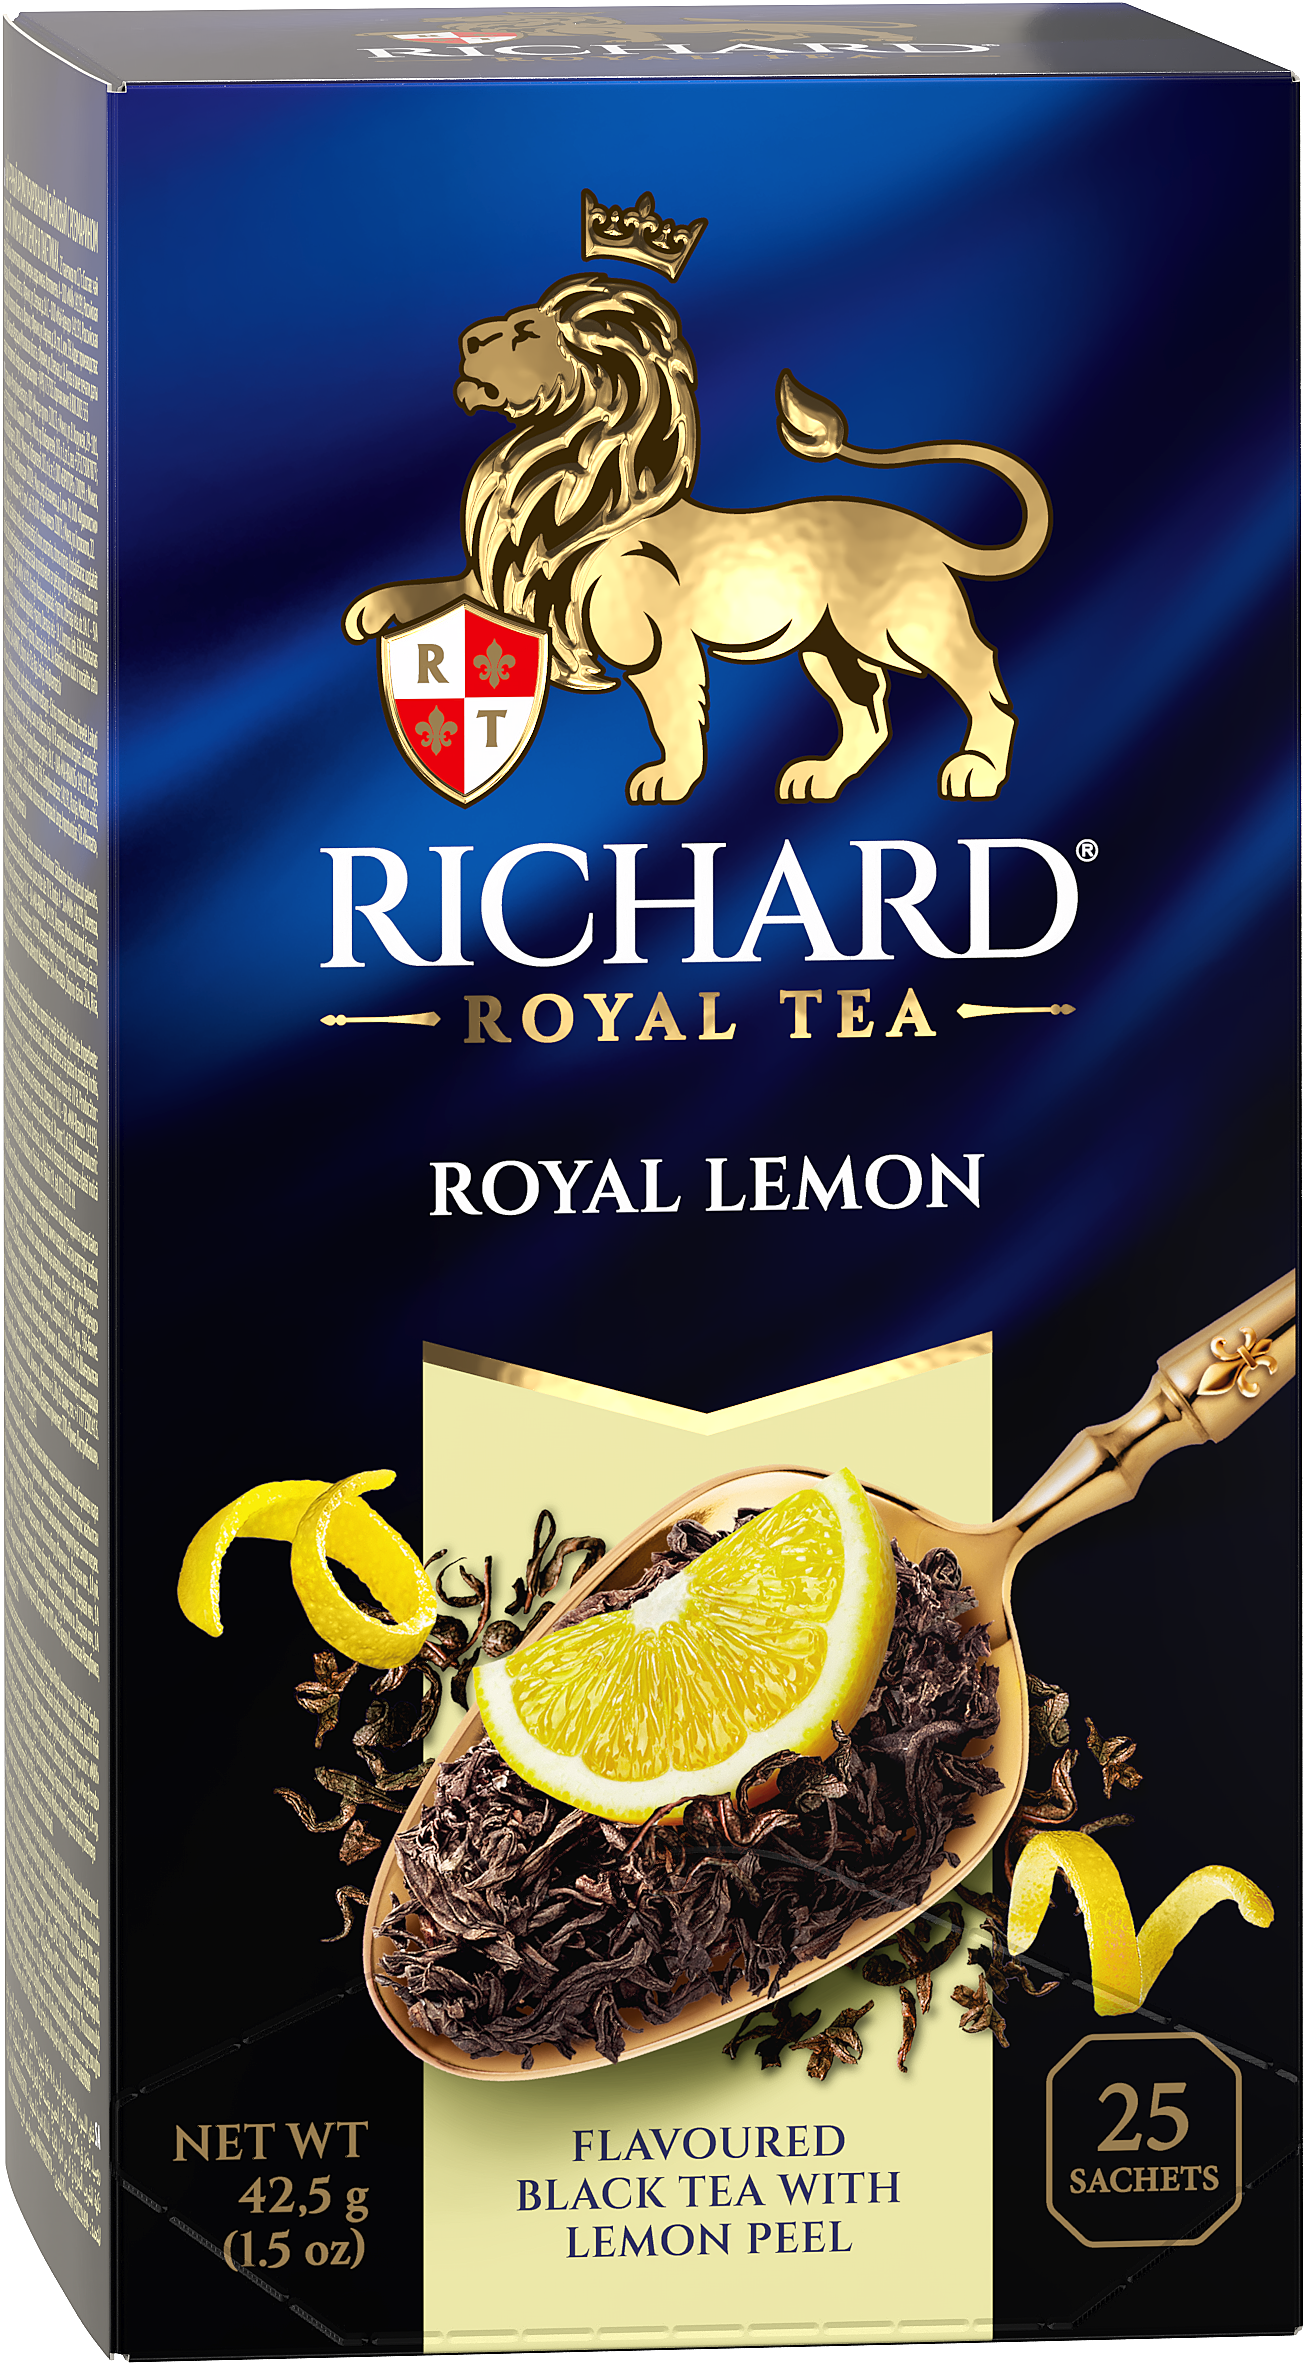 Richard "Royal Lemon" black tea flavored 25 sachets, 42.5g